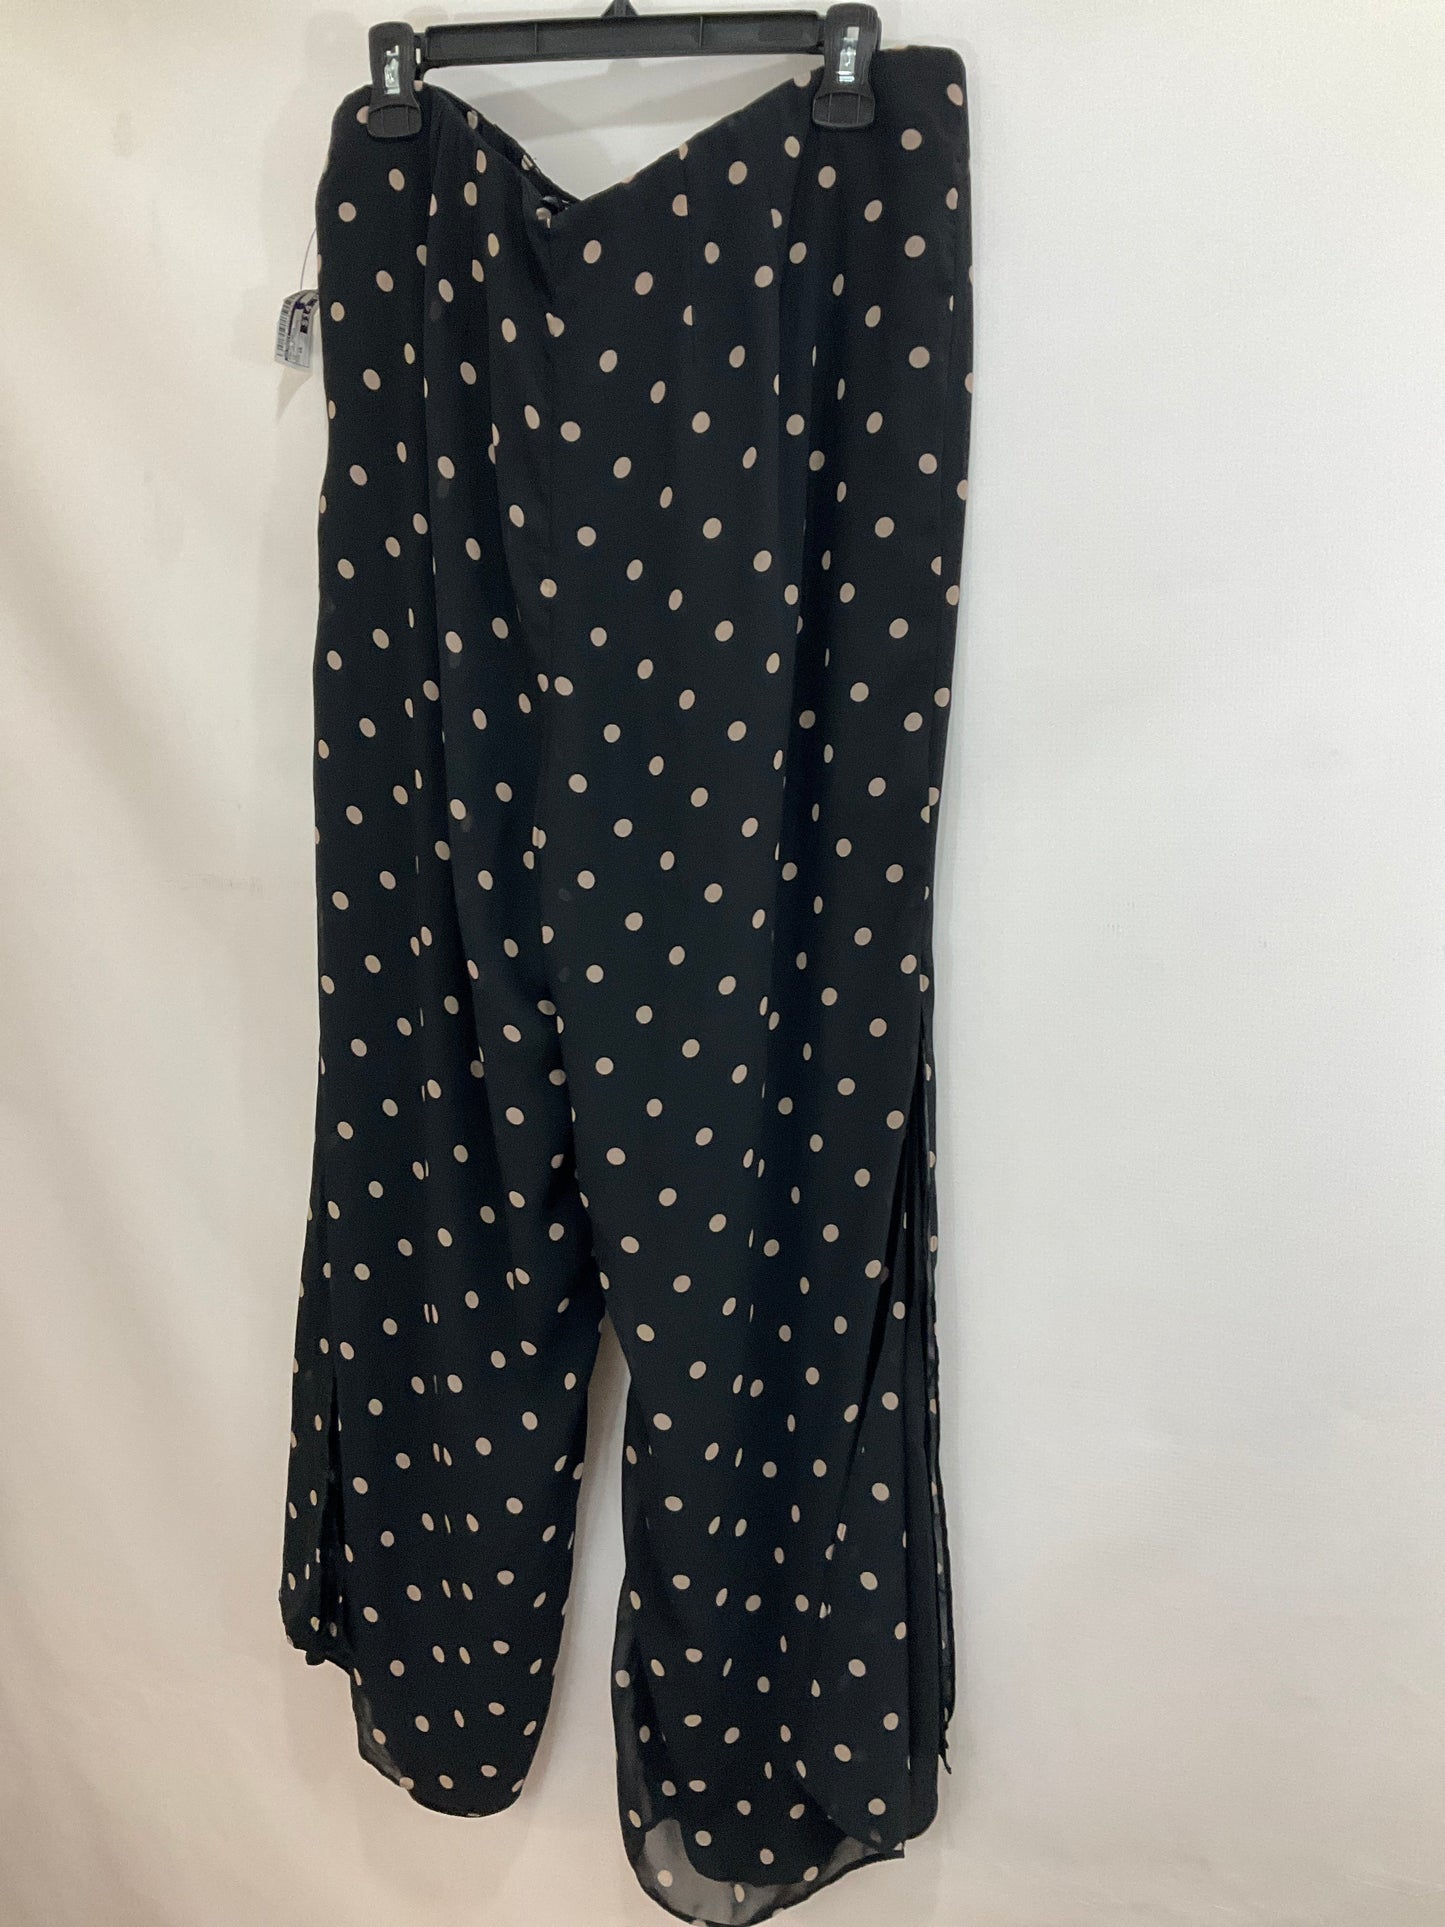 Polkadot Pattern Pants Dress Eloquii, Size 16